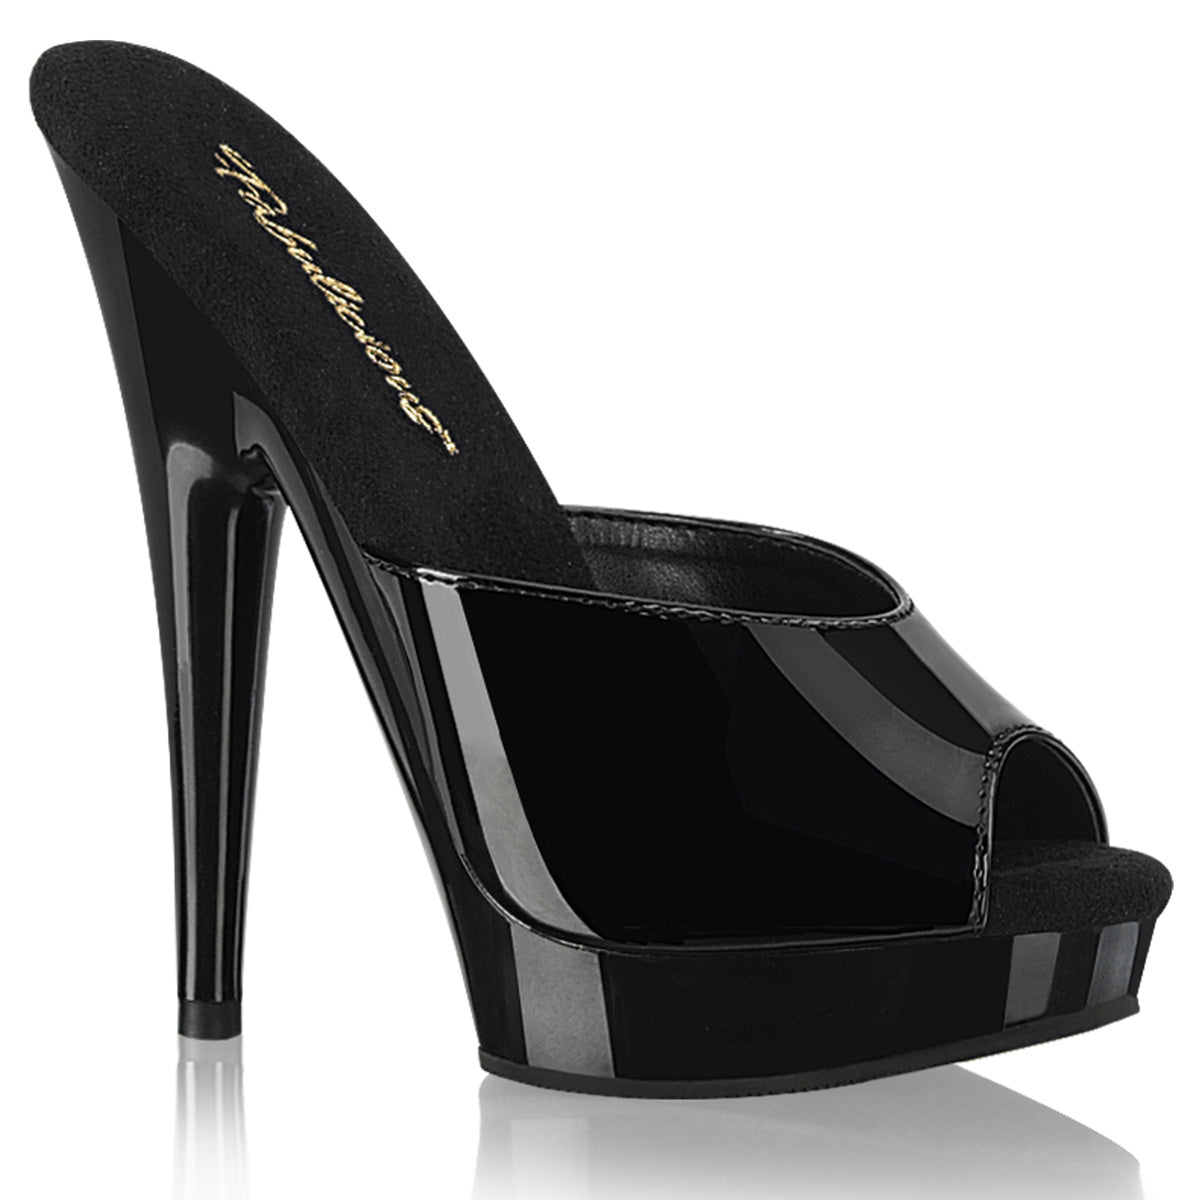 601-Nicole Ellie Shoes, 6 inch stiletto high heels Ankle Strap Black  Platforms Buckle Toe shoes